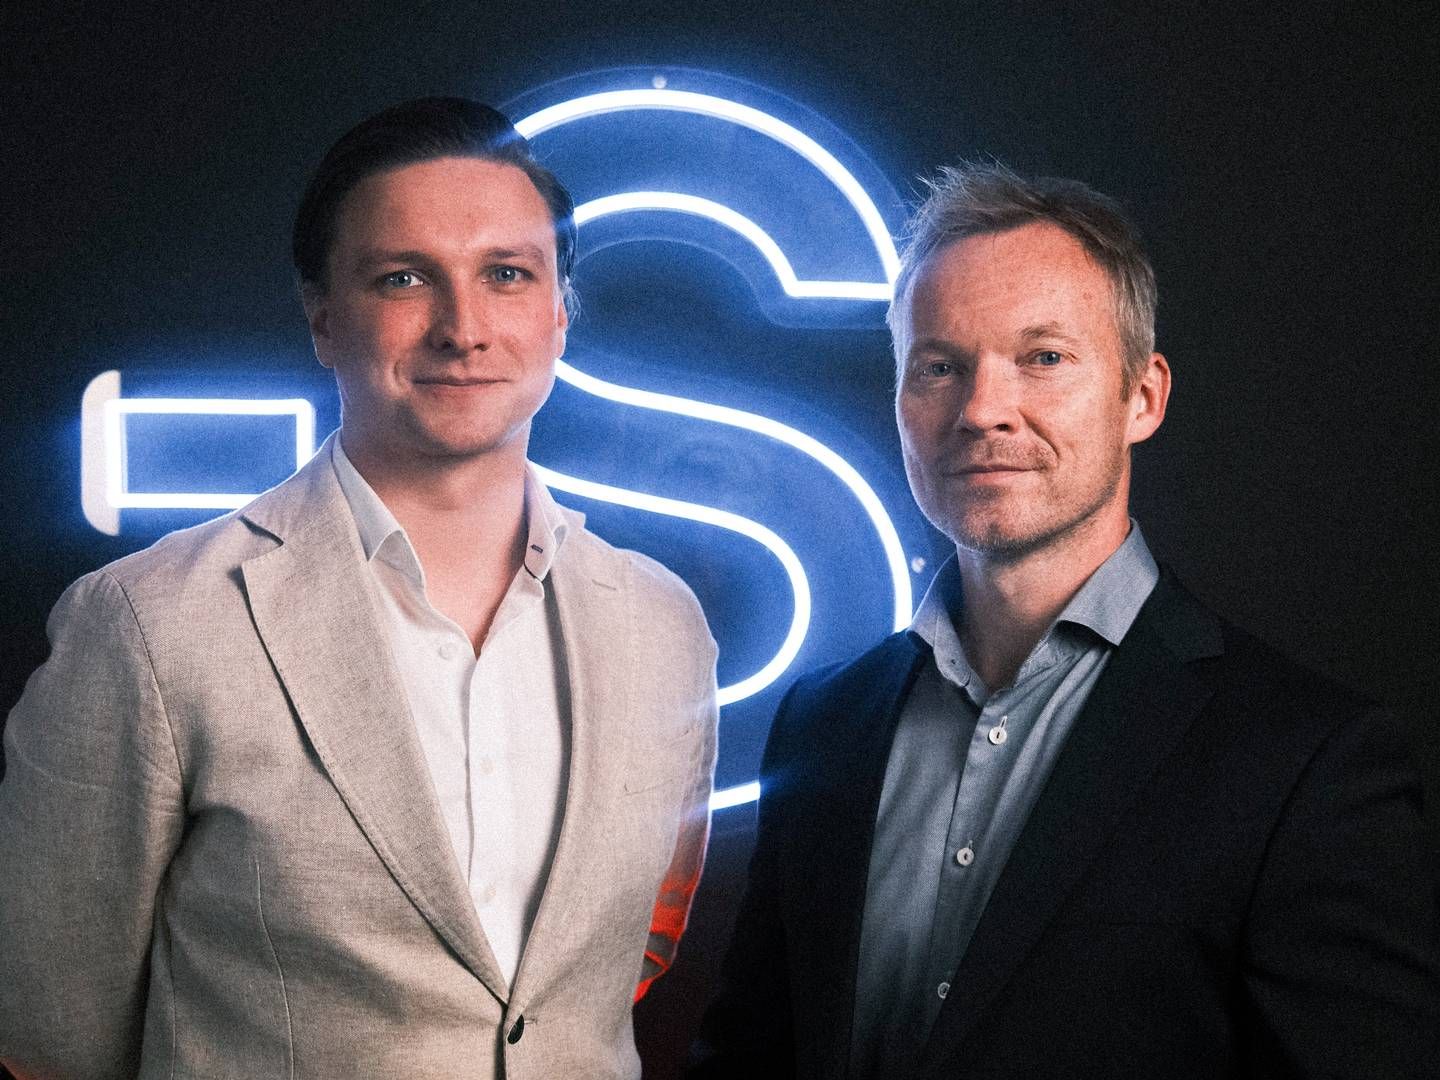 Fra venstre: Salgsdirektør i Strise, Mike Connors, nye leder for bedriftskontoer i Strise, Håvar Snapa. | Foto: Strise / PR